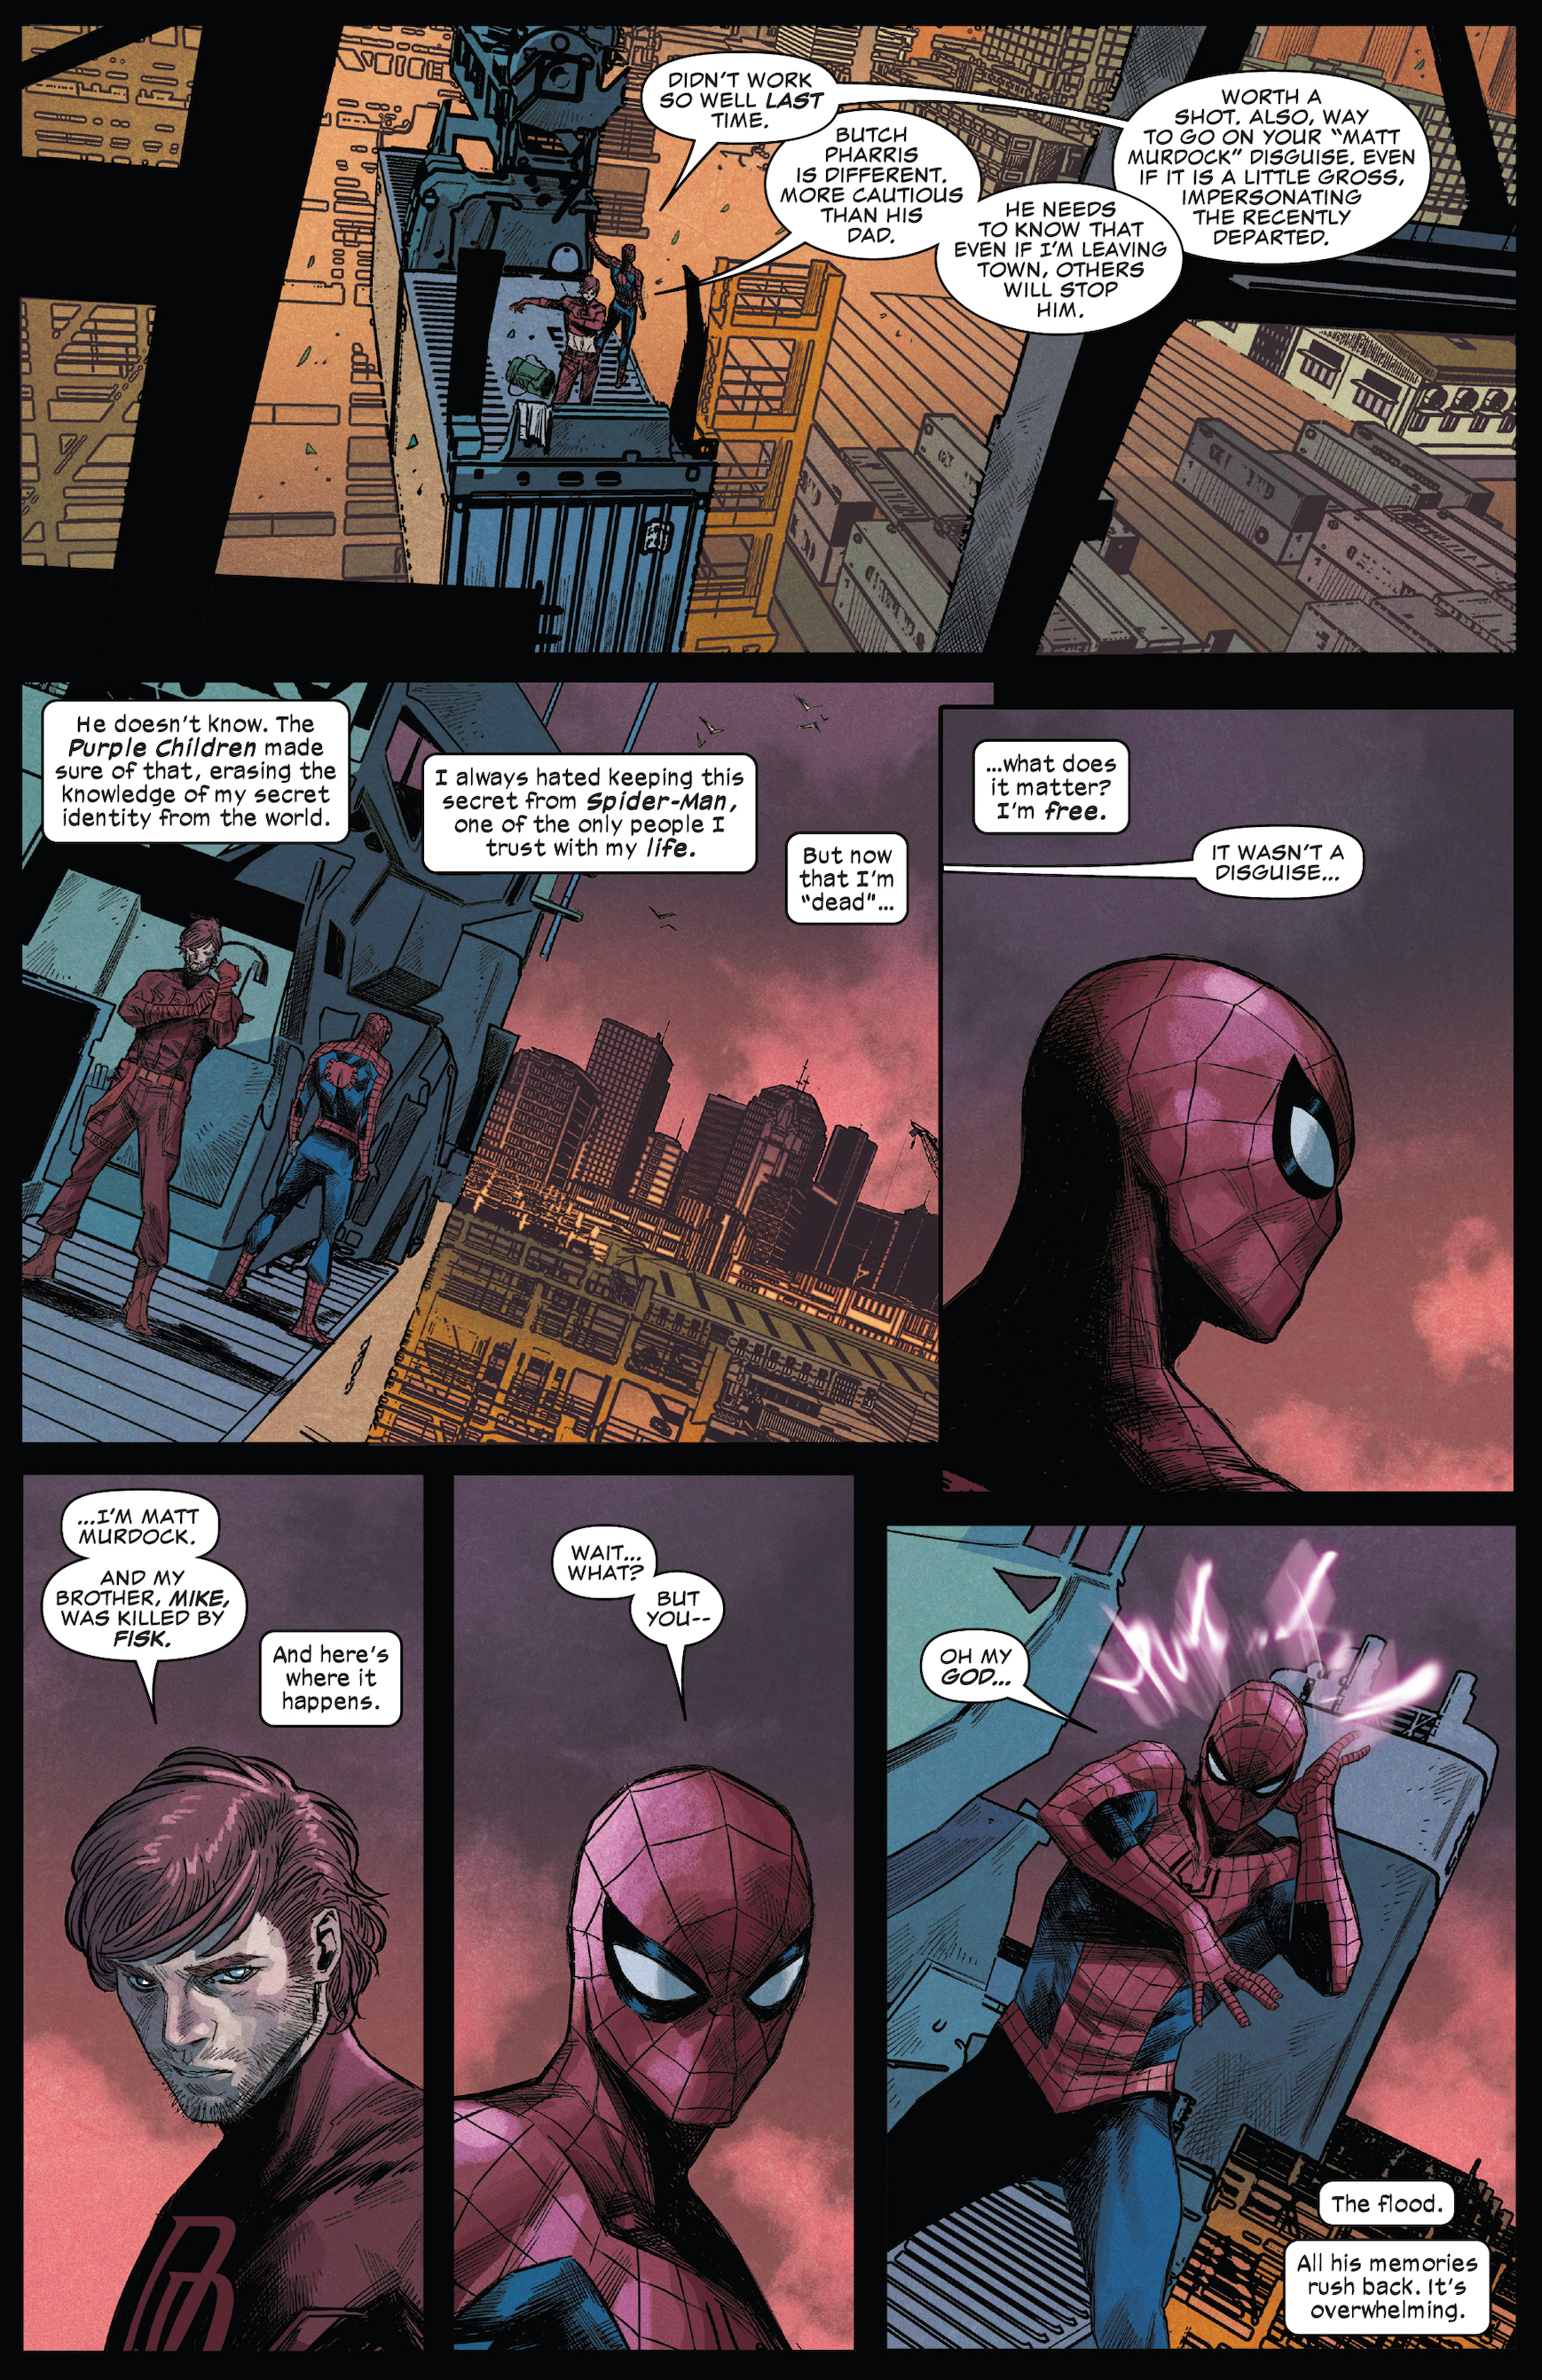 Spider Man and Daredevils secret identities